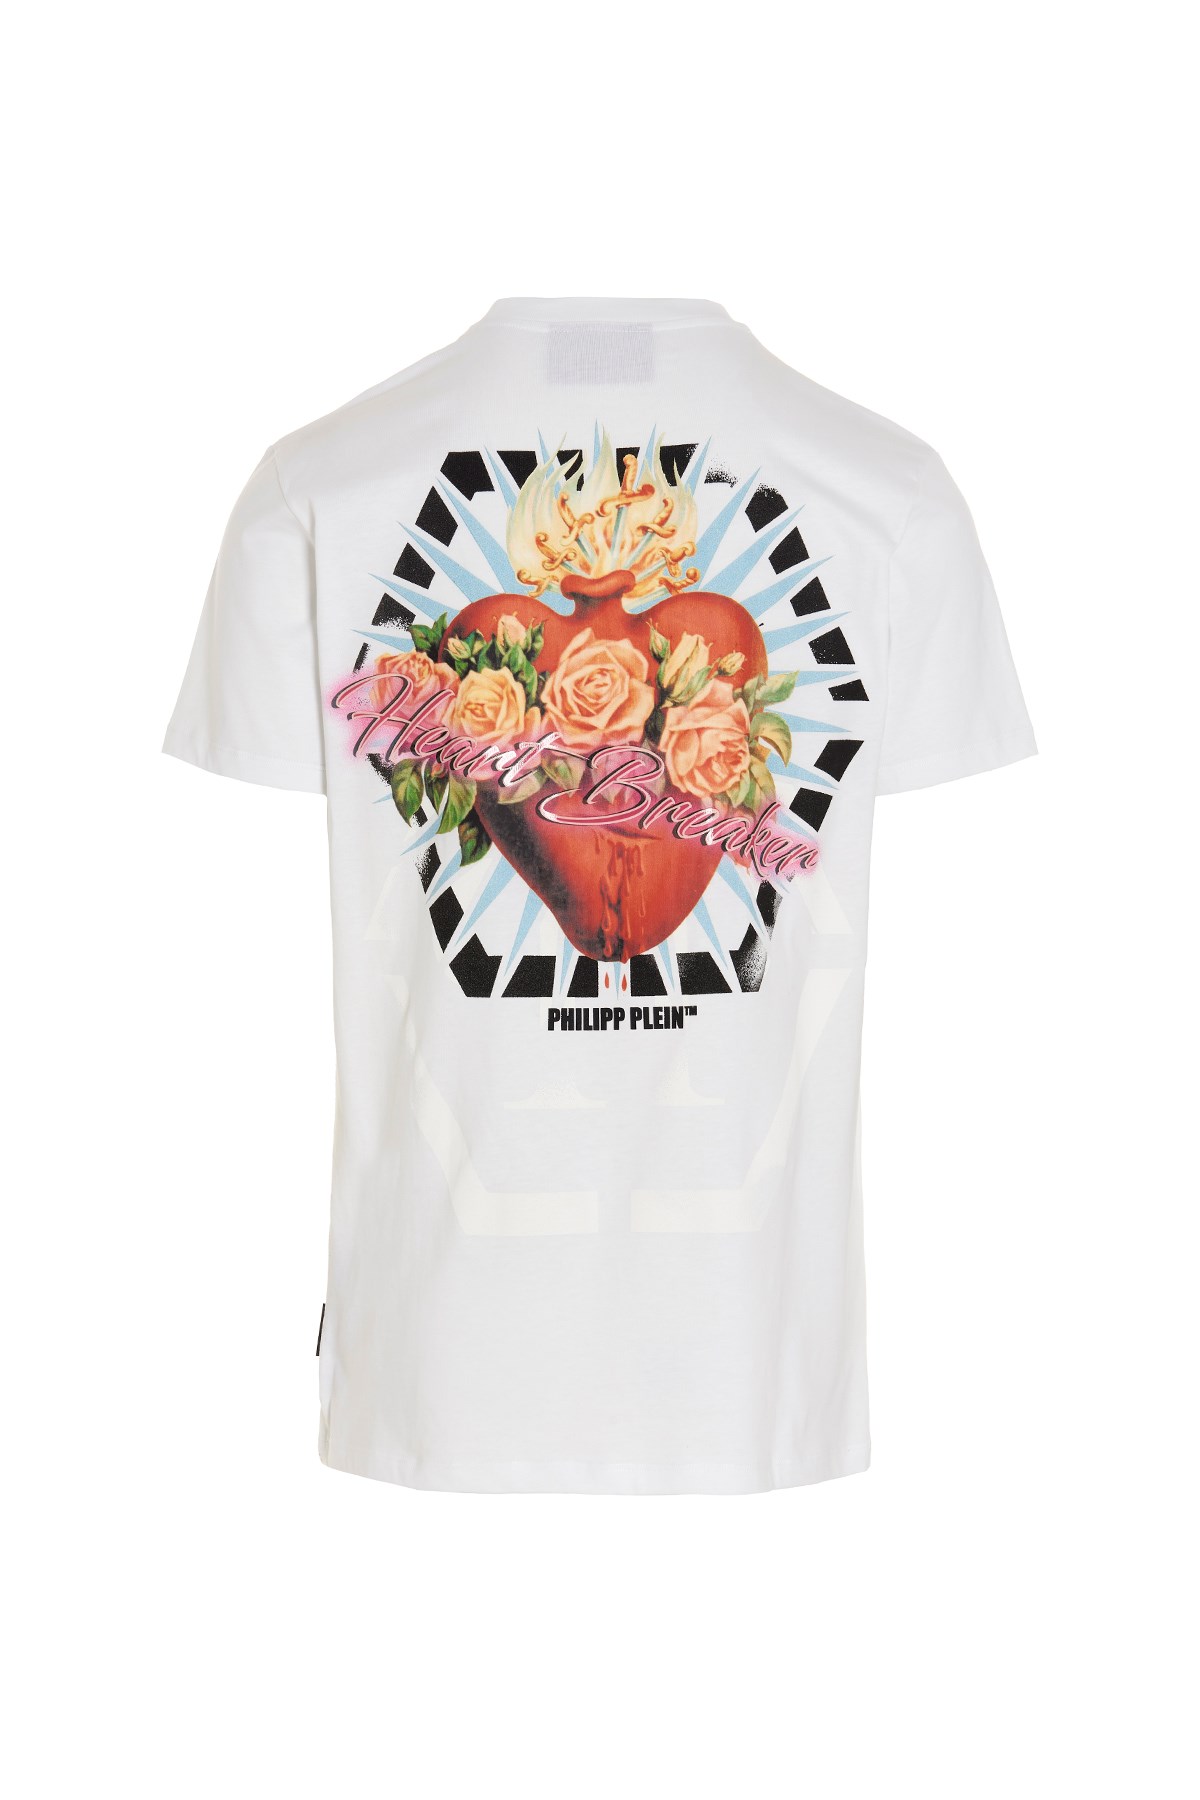 PHILIPP PLEIN T-Shirt 'Heart Breaker'